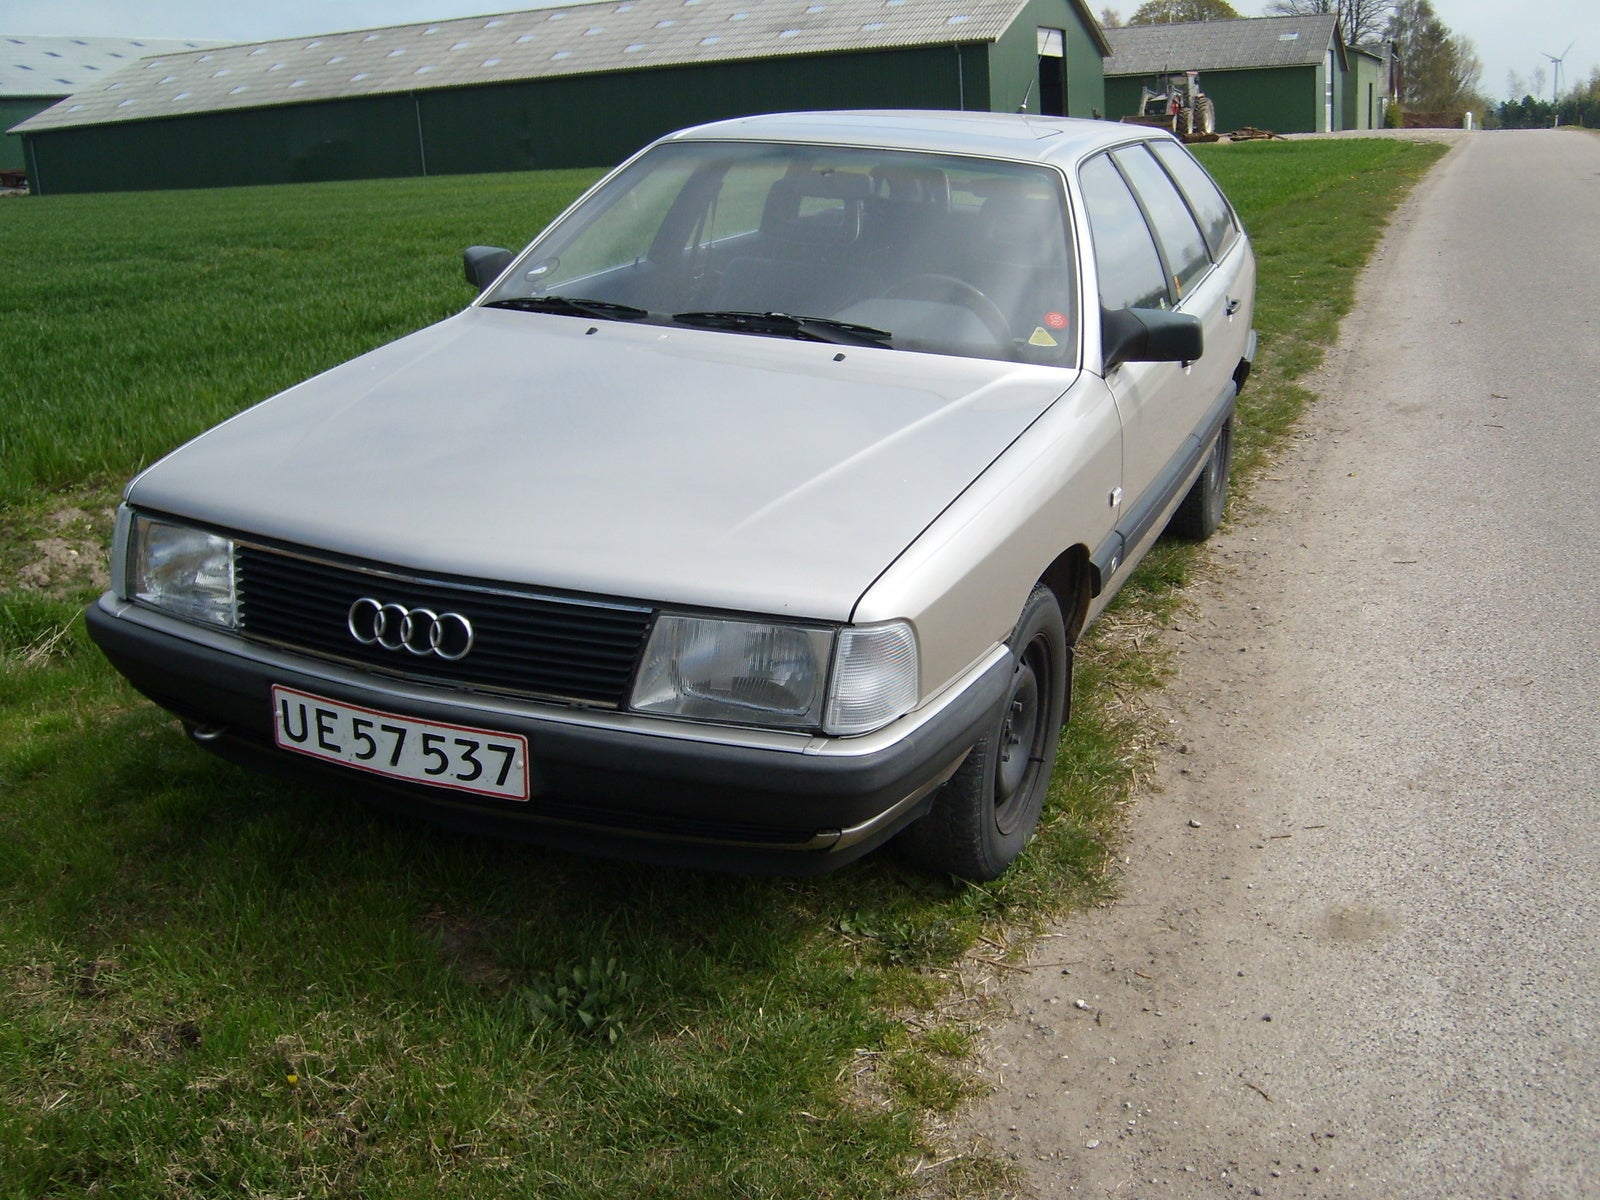 1987 Audi 100 Test Drive Review - CarGurus.com